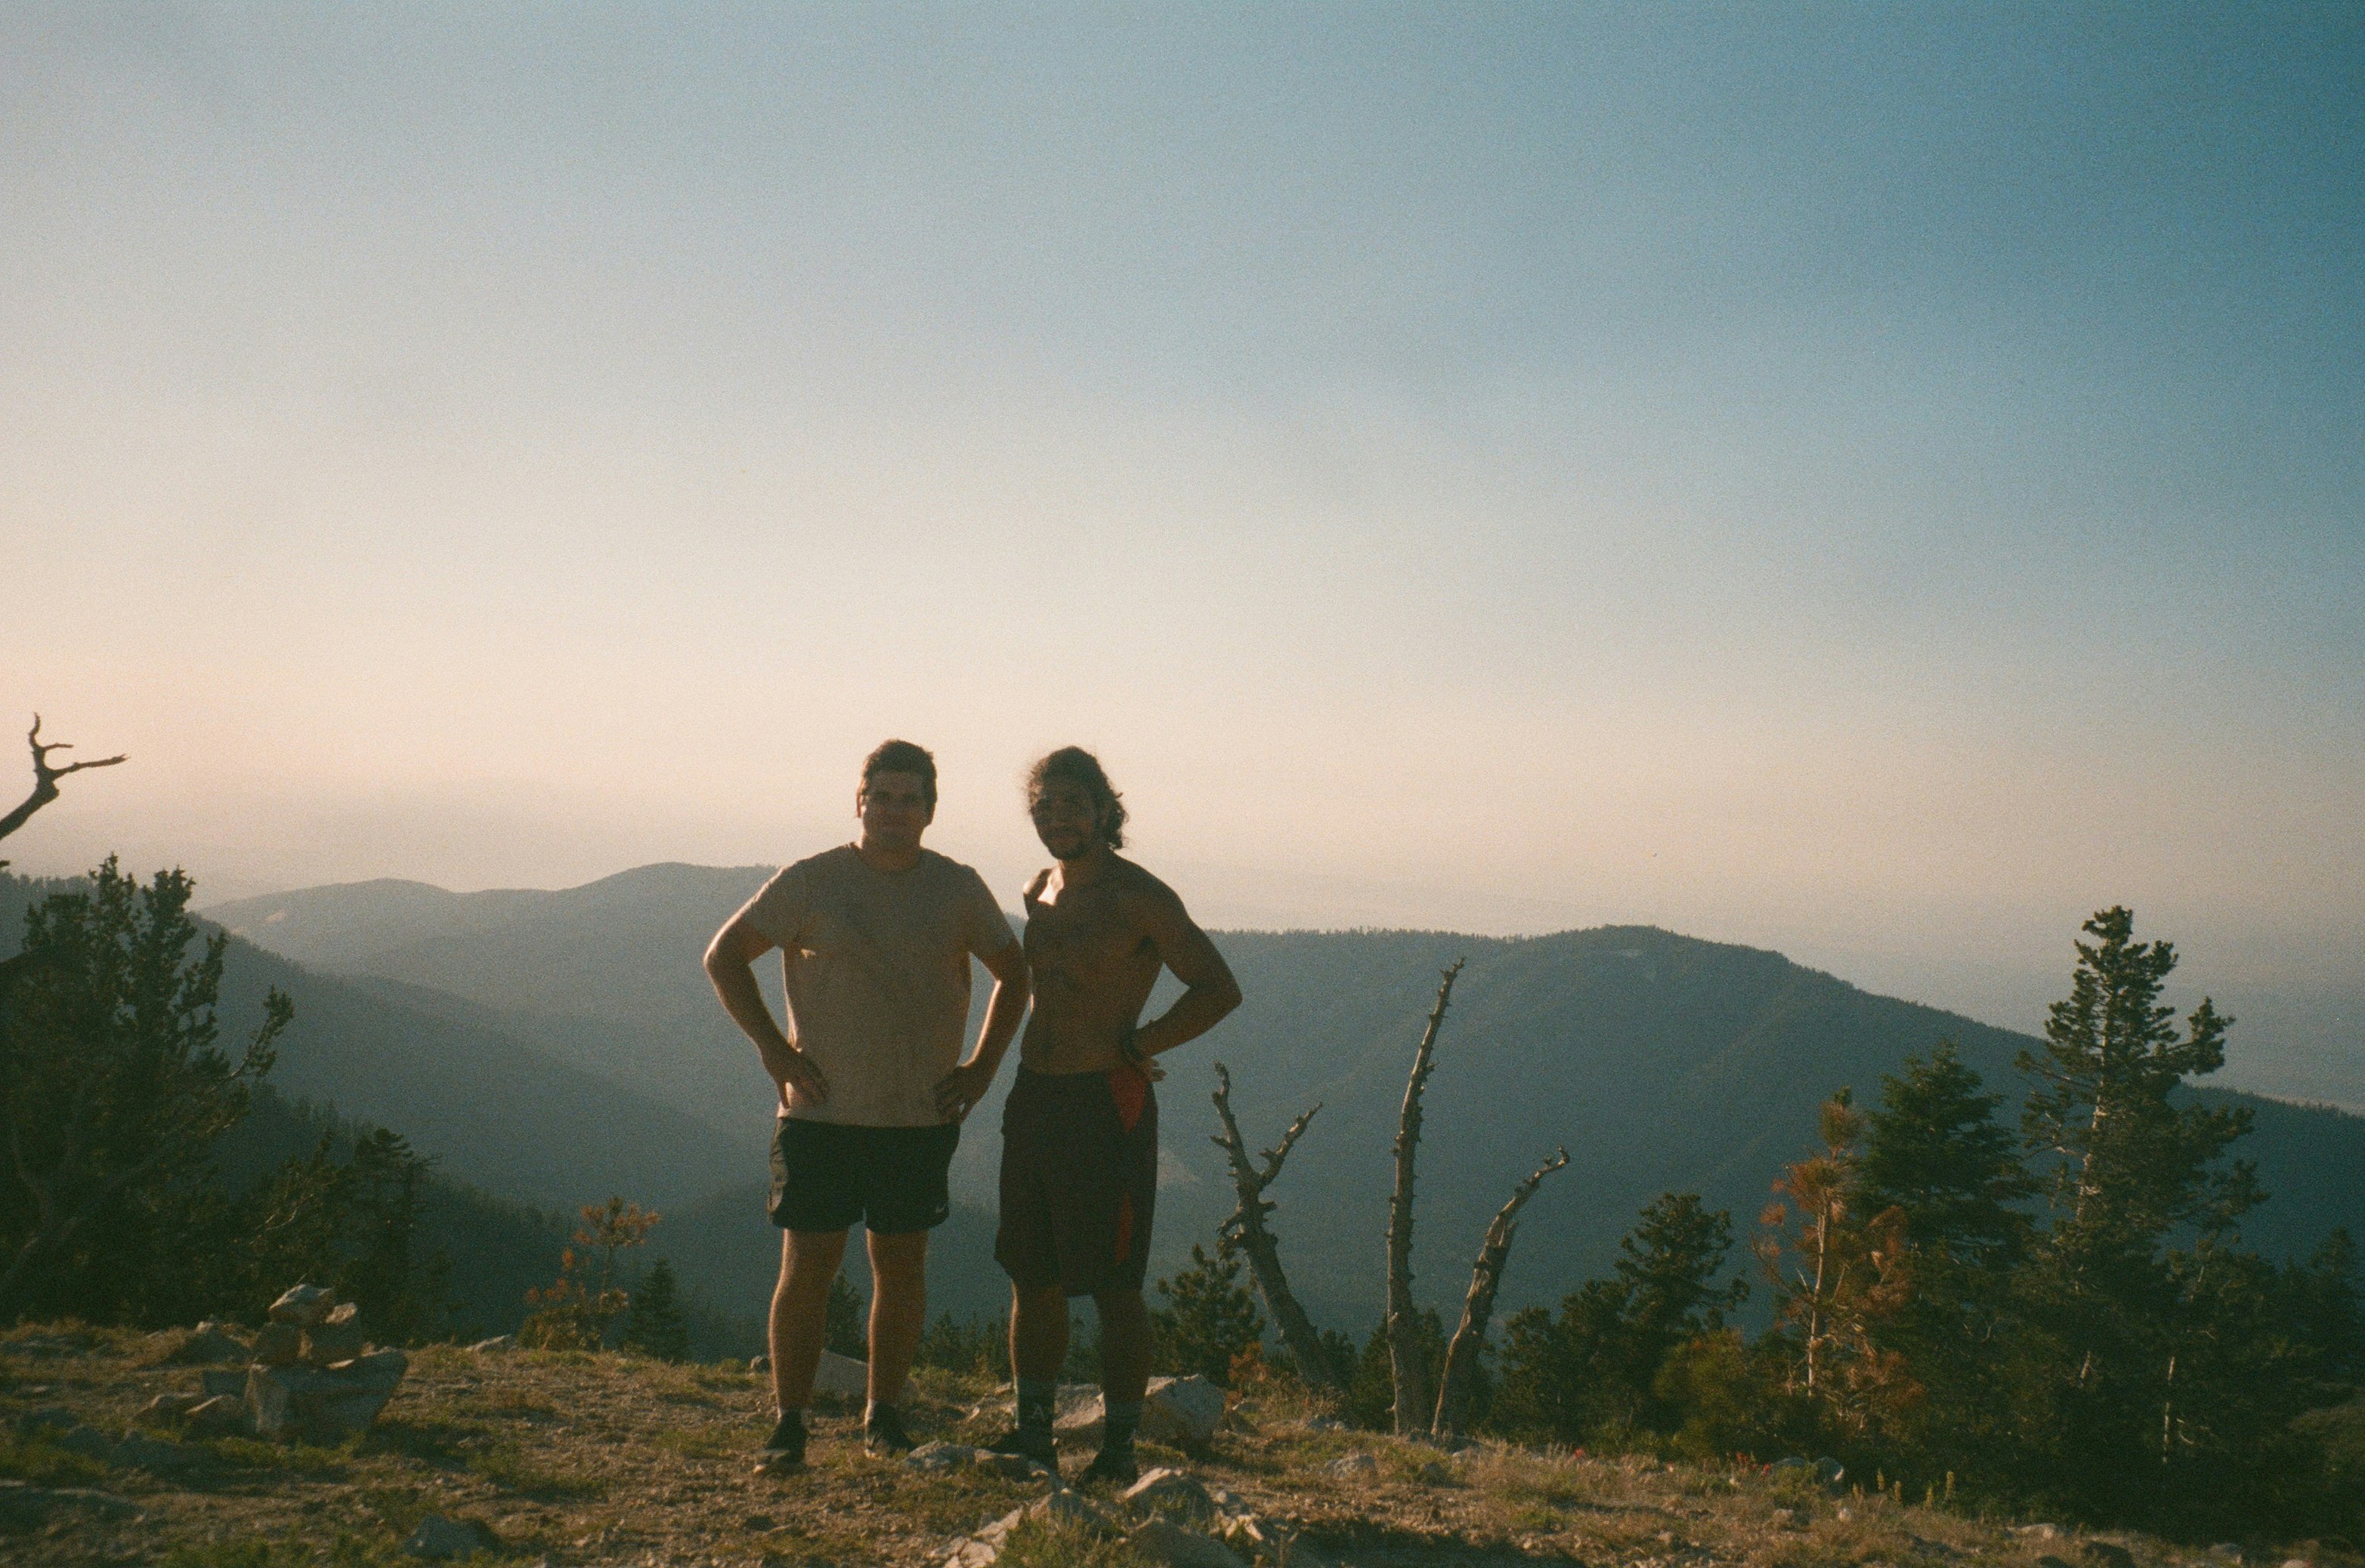 2 men standing on mountain during daytime